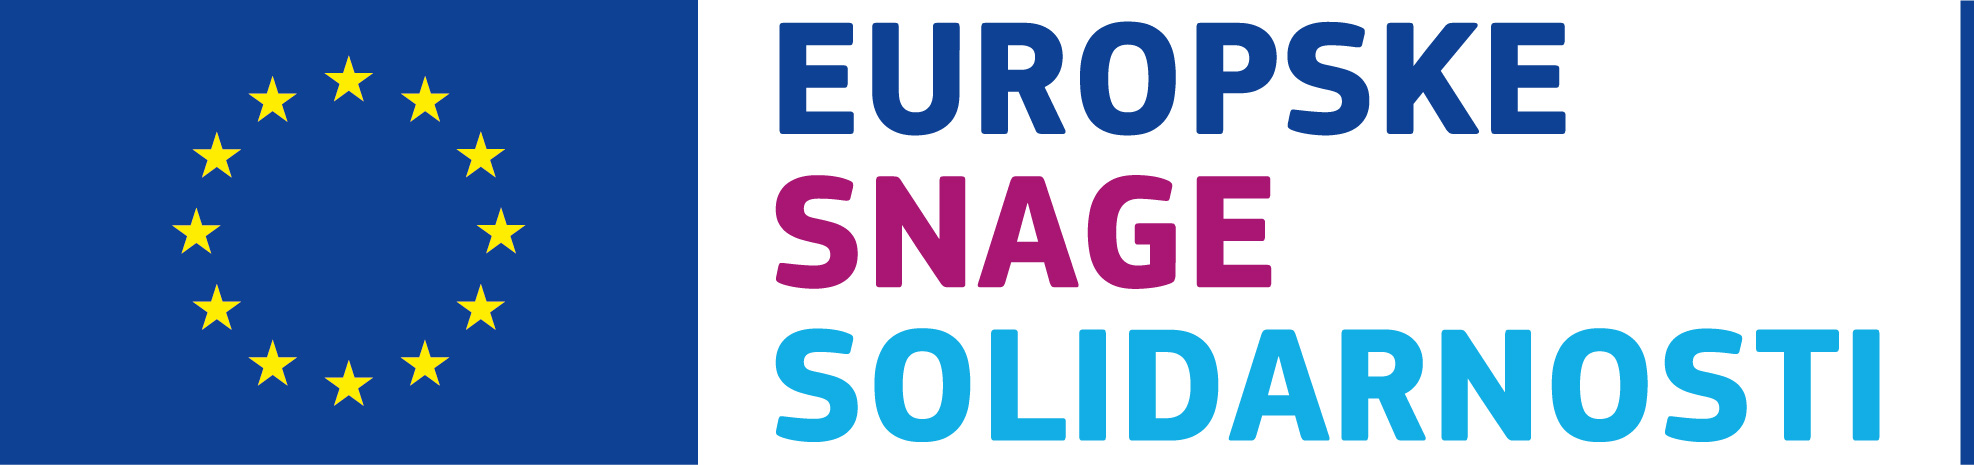 Svečana konferencija povodom službenog otvaranja programa Europske snage solidarnosti - Slika 1